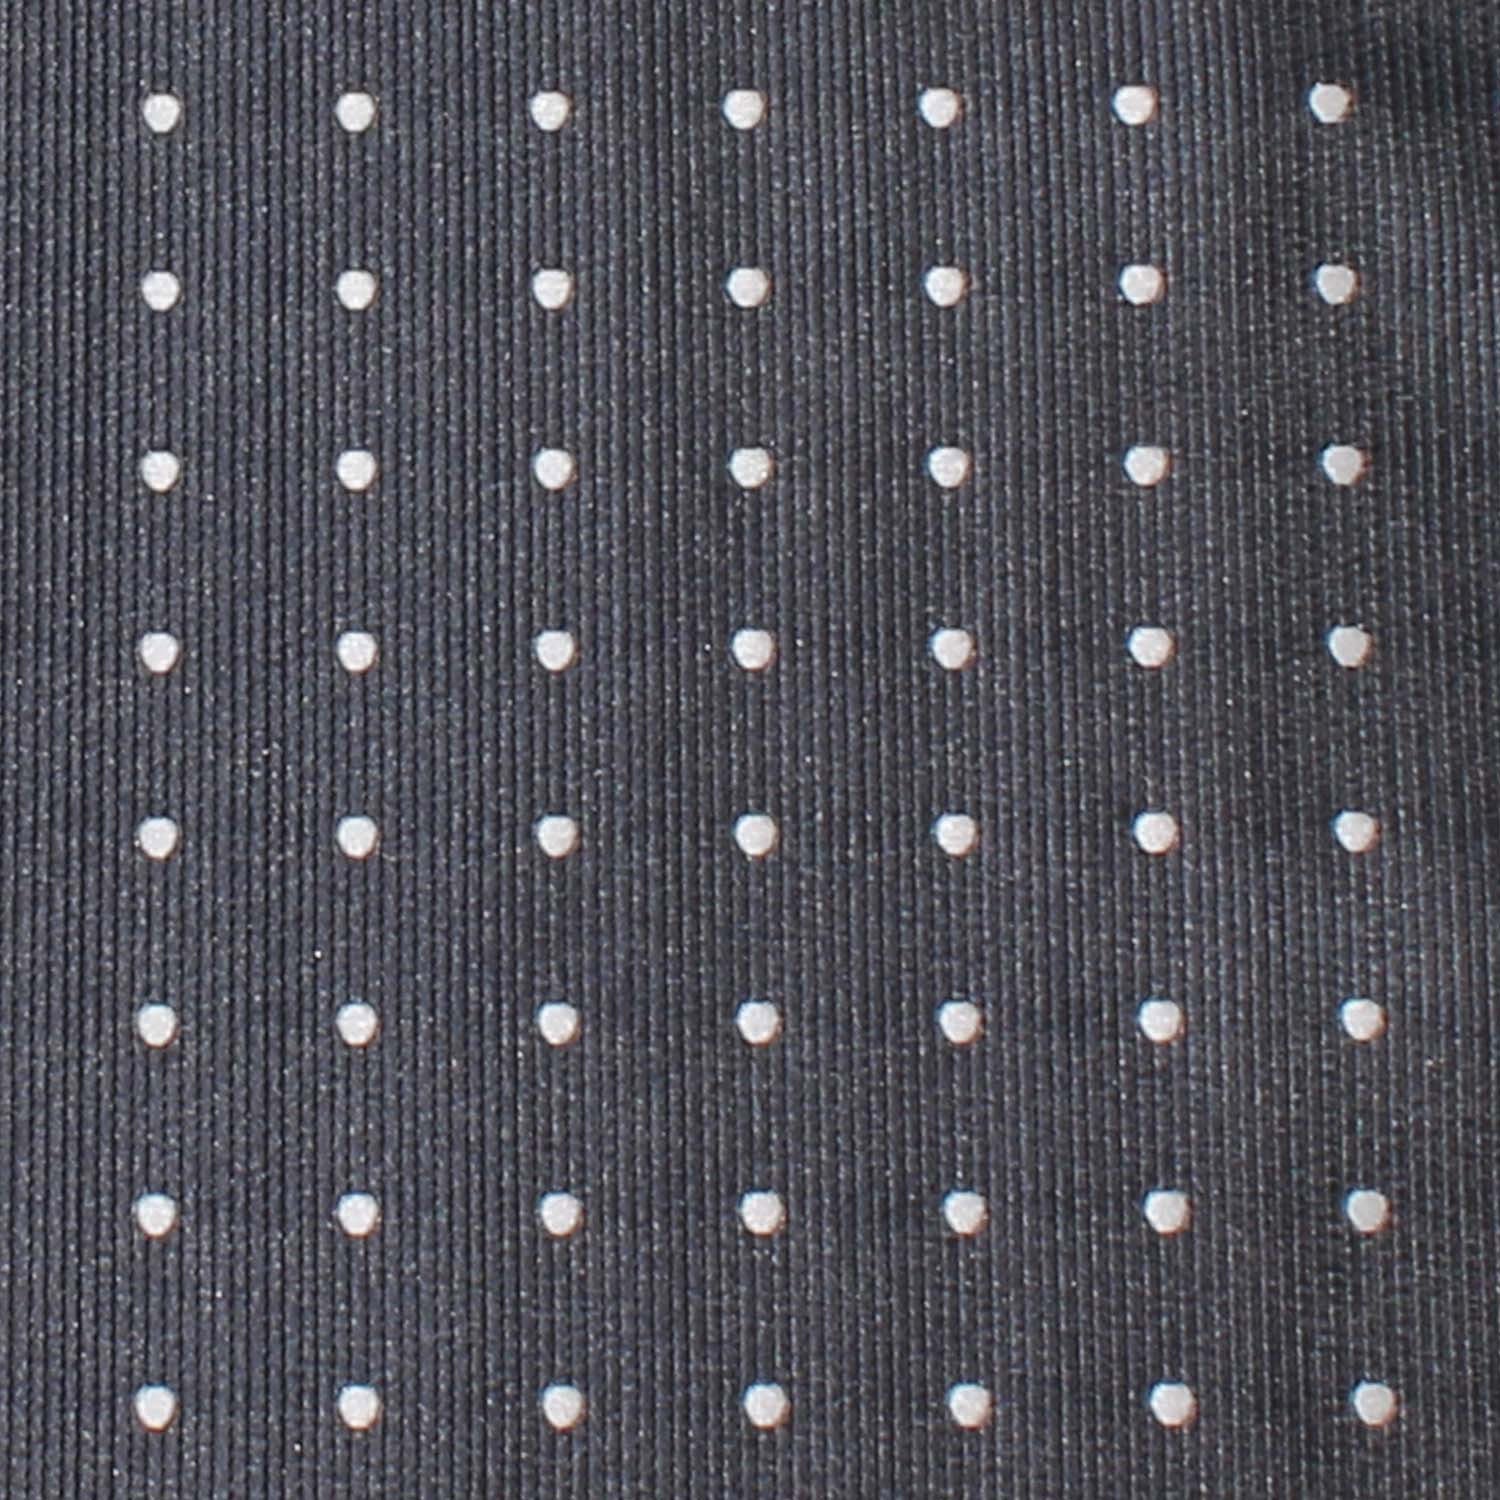 Charcoal Grey with White Polka Dots Fabric Self Tie Diamond Tip Bow TieM121